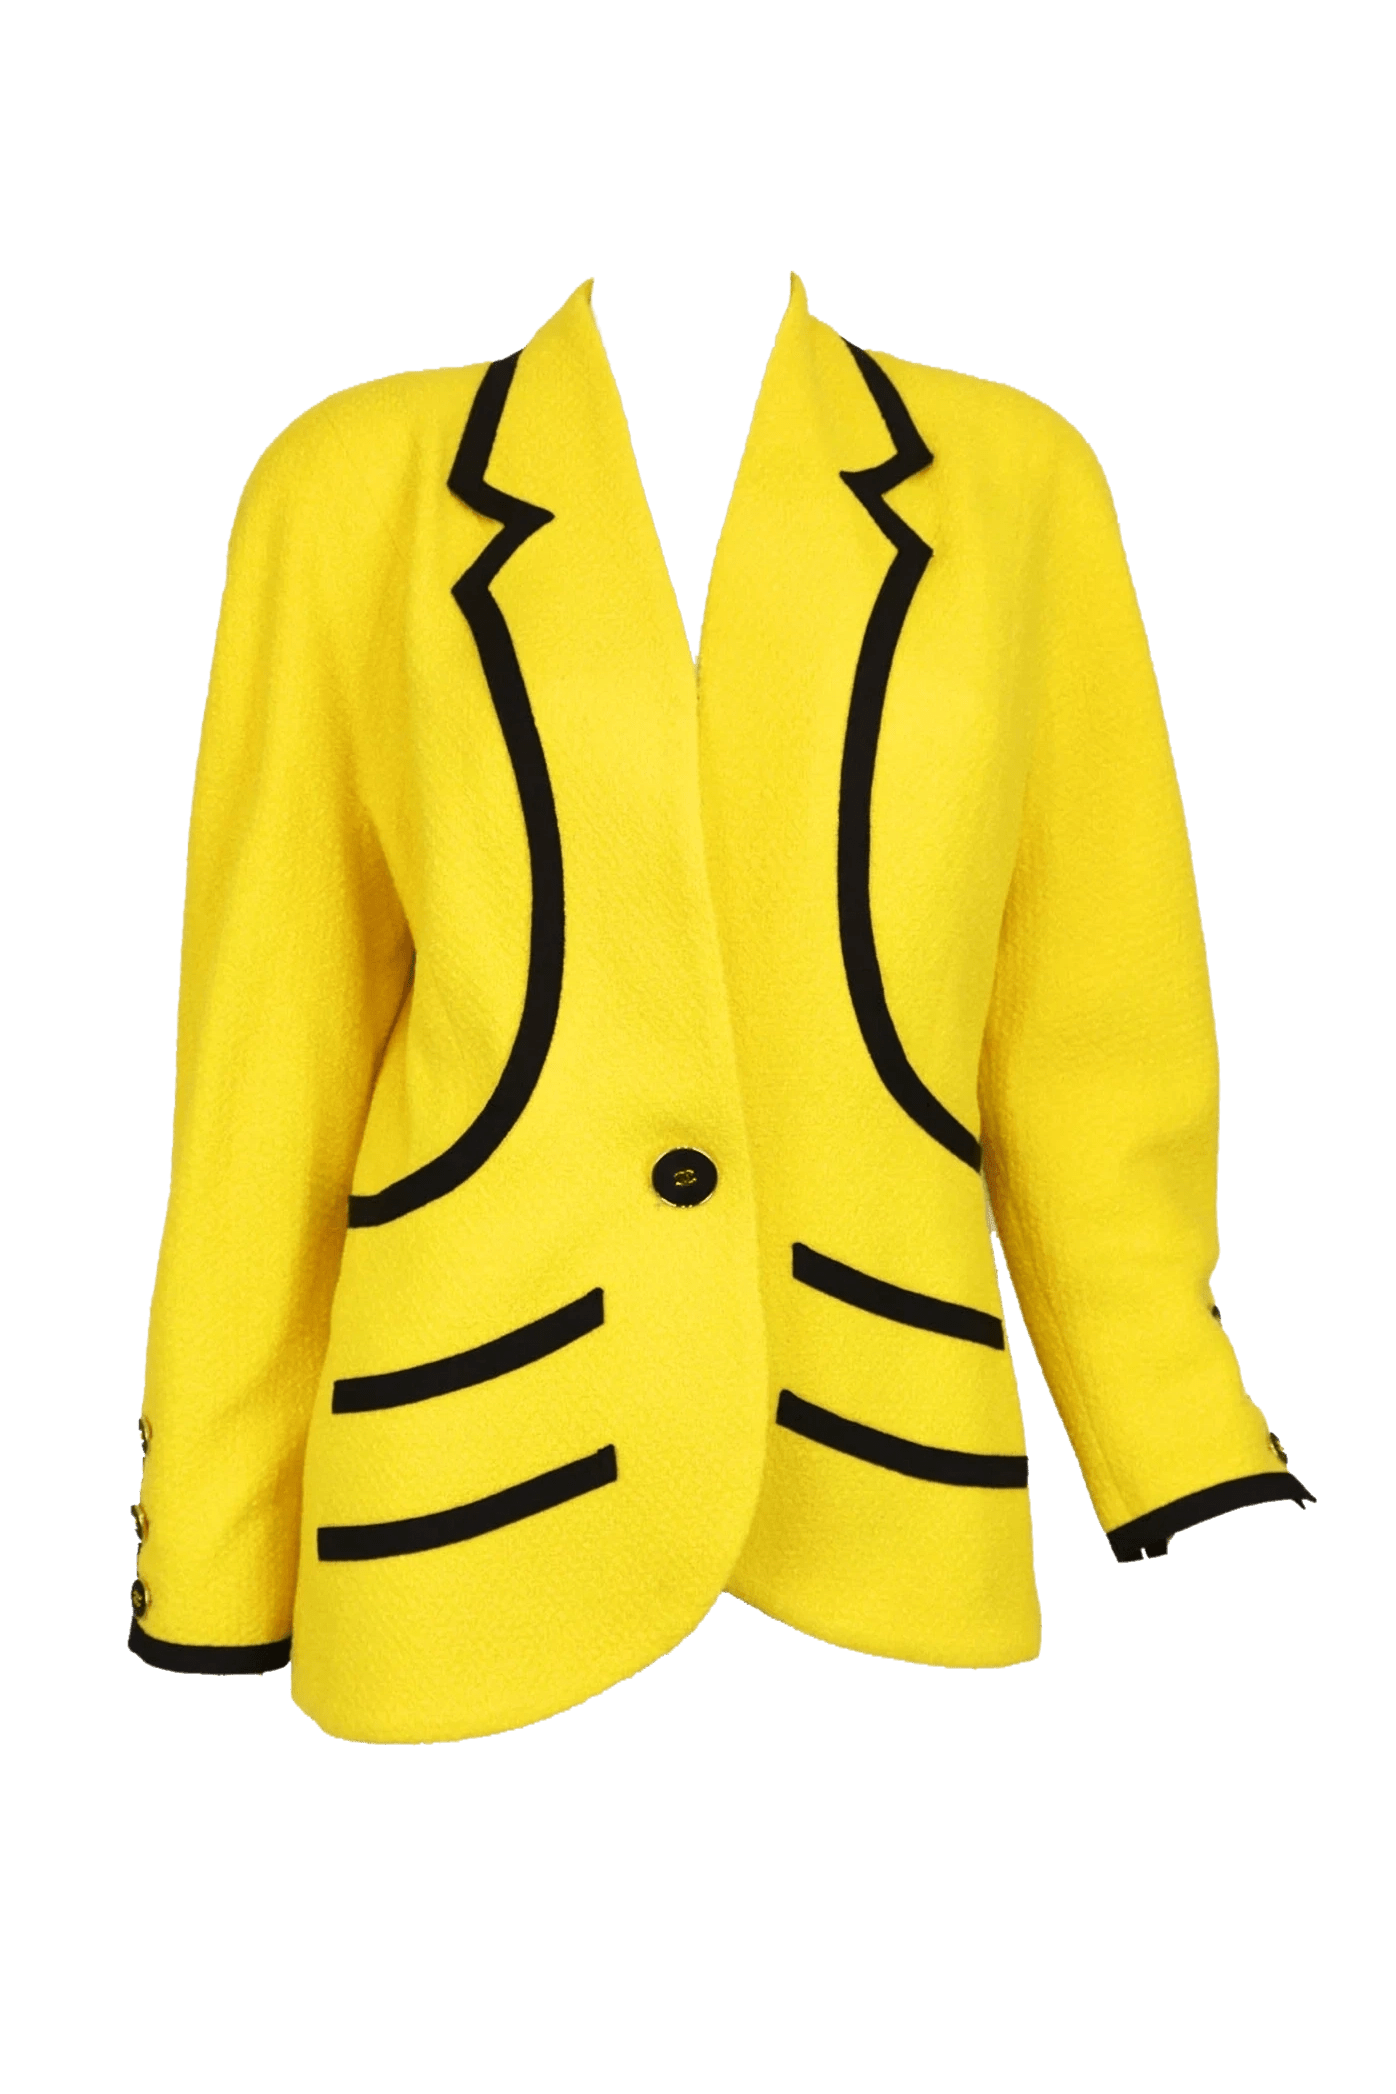 Chanel Boutique Iconic Jacket Vintage 1993 - Foxy Couture Carmel